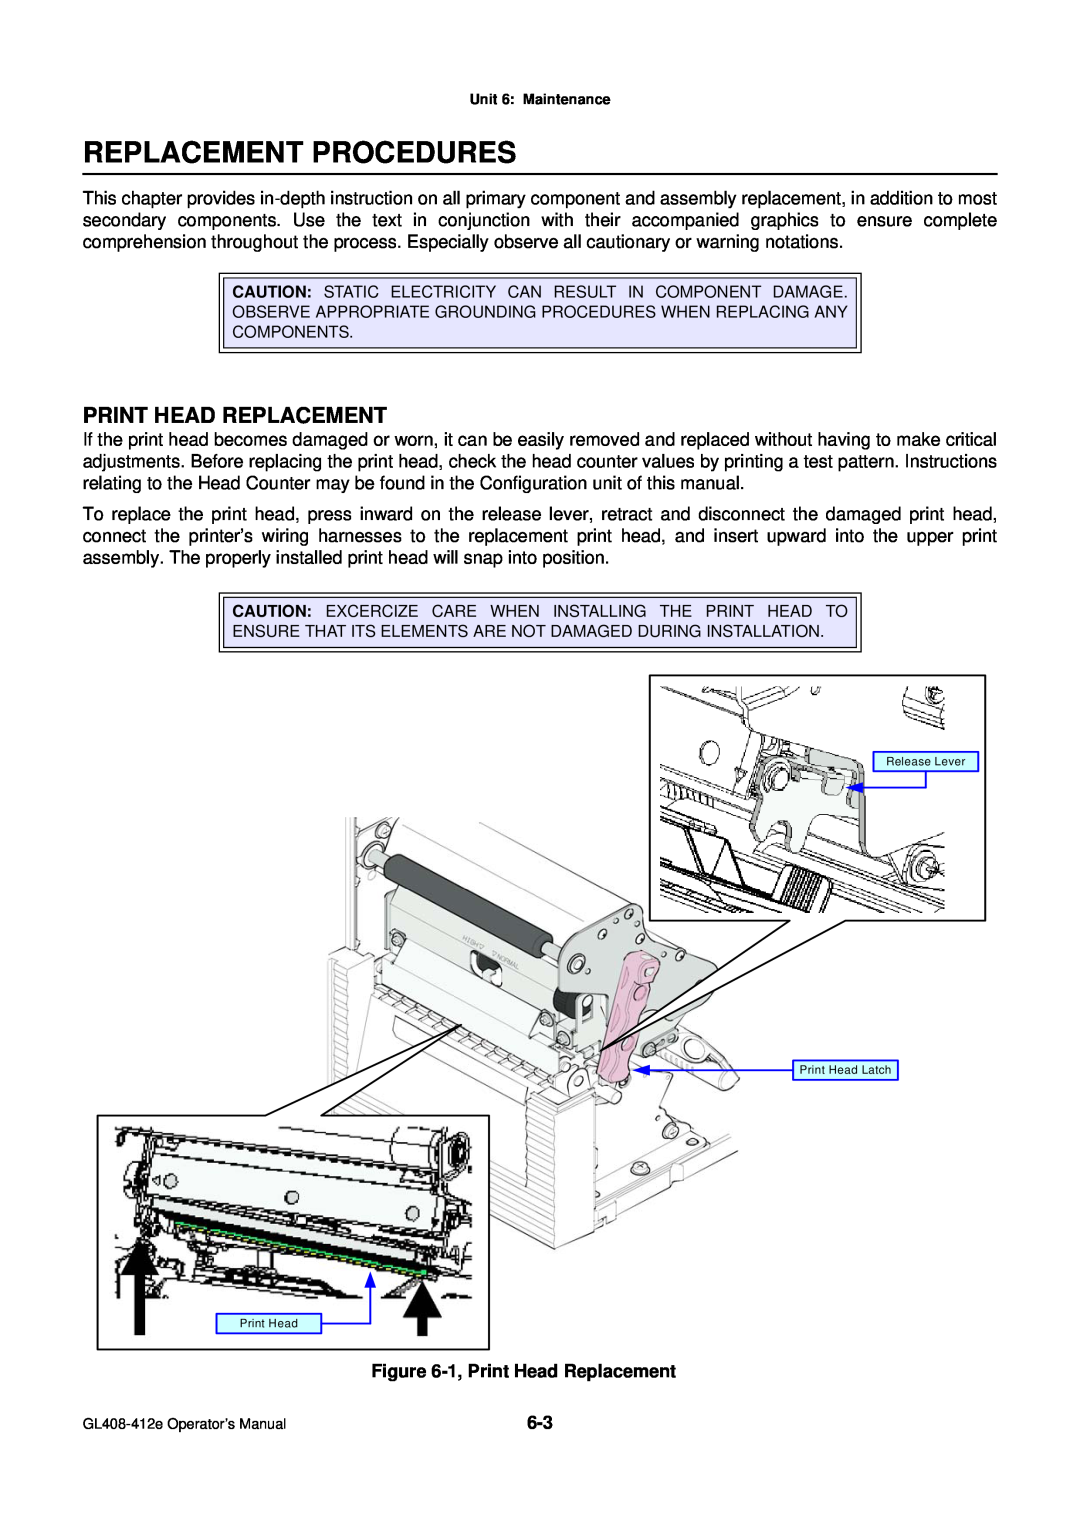 SATO GL4XXE manual Replacement Procedures, Print Head Replacement 